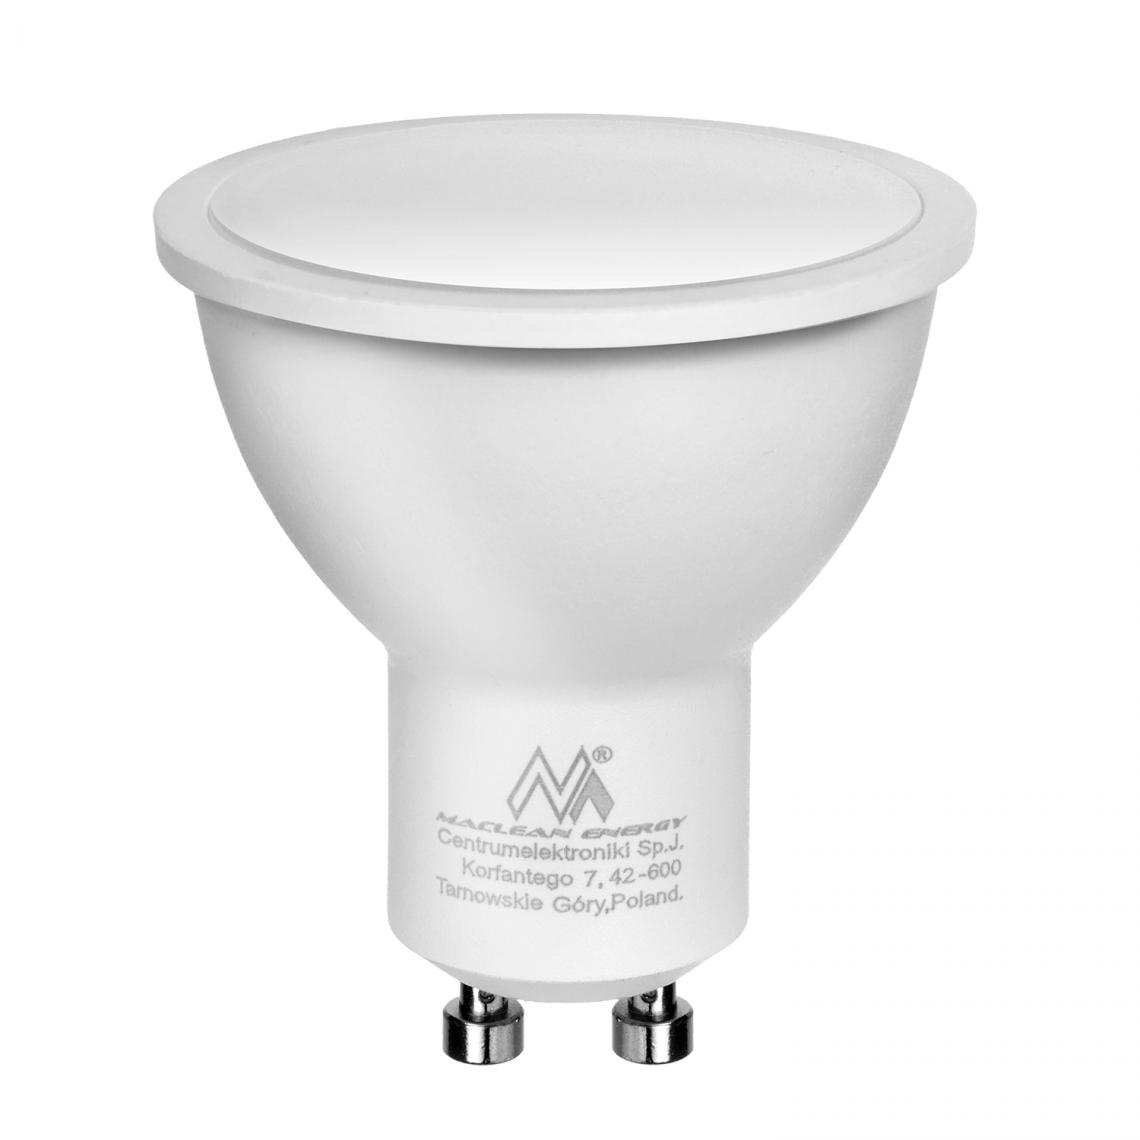 Maclean - Ampoule LED GU10 5W Maclean Energy MCE435 WW blanc chaud - Ampoules LED